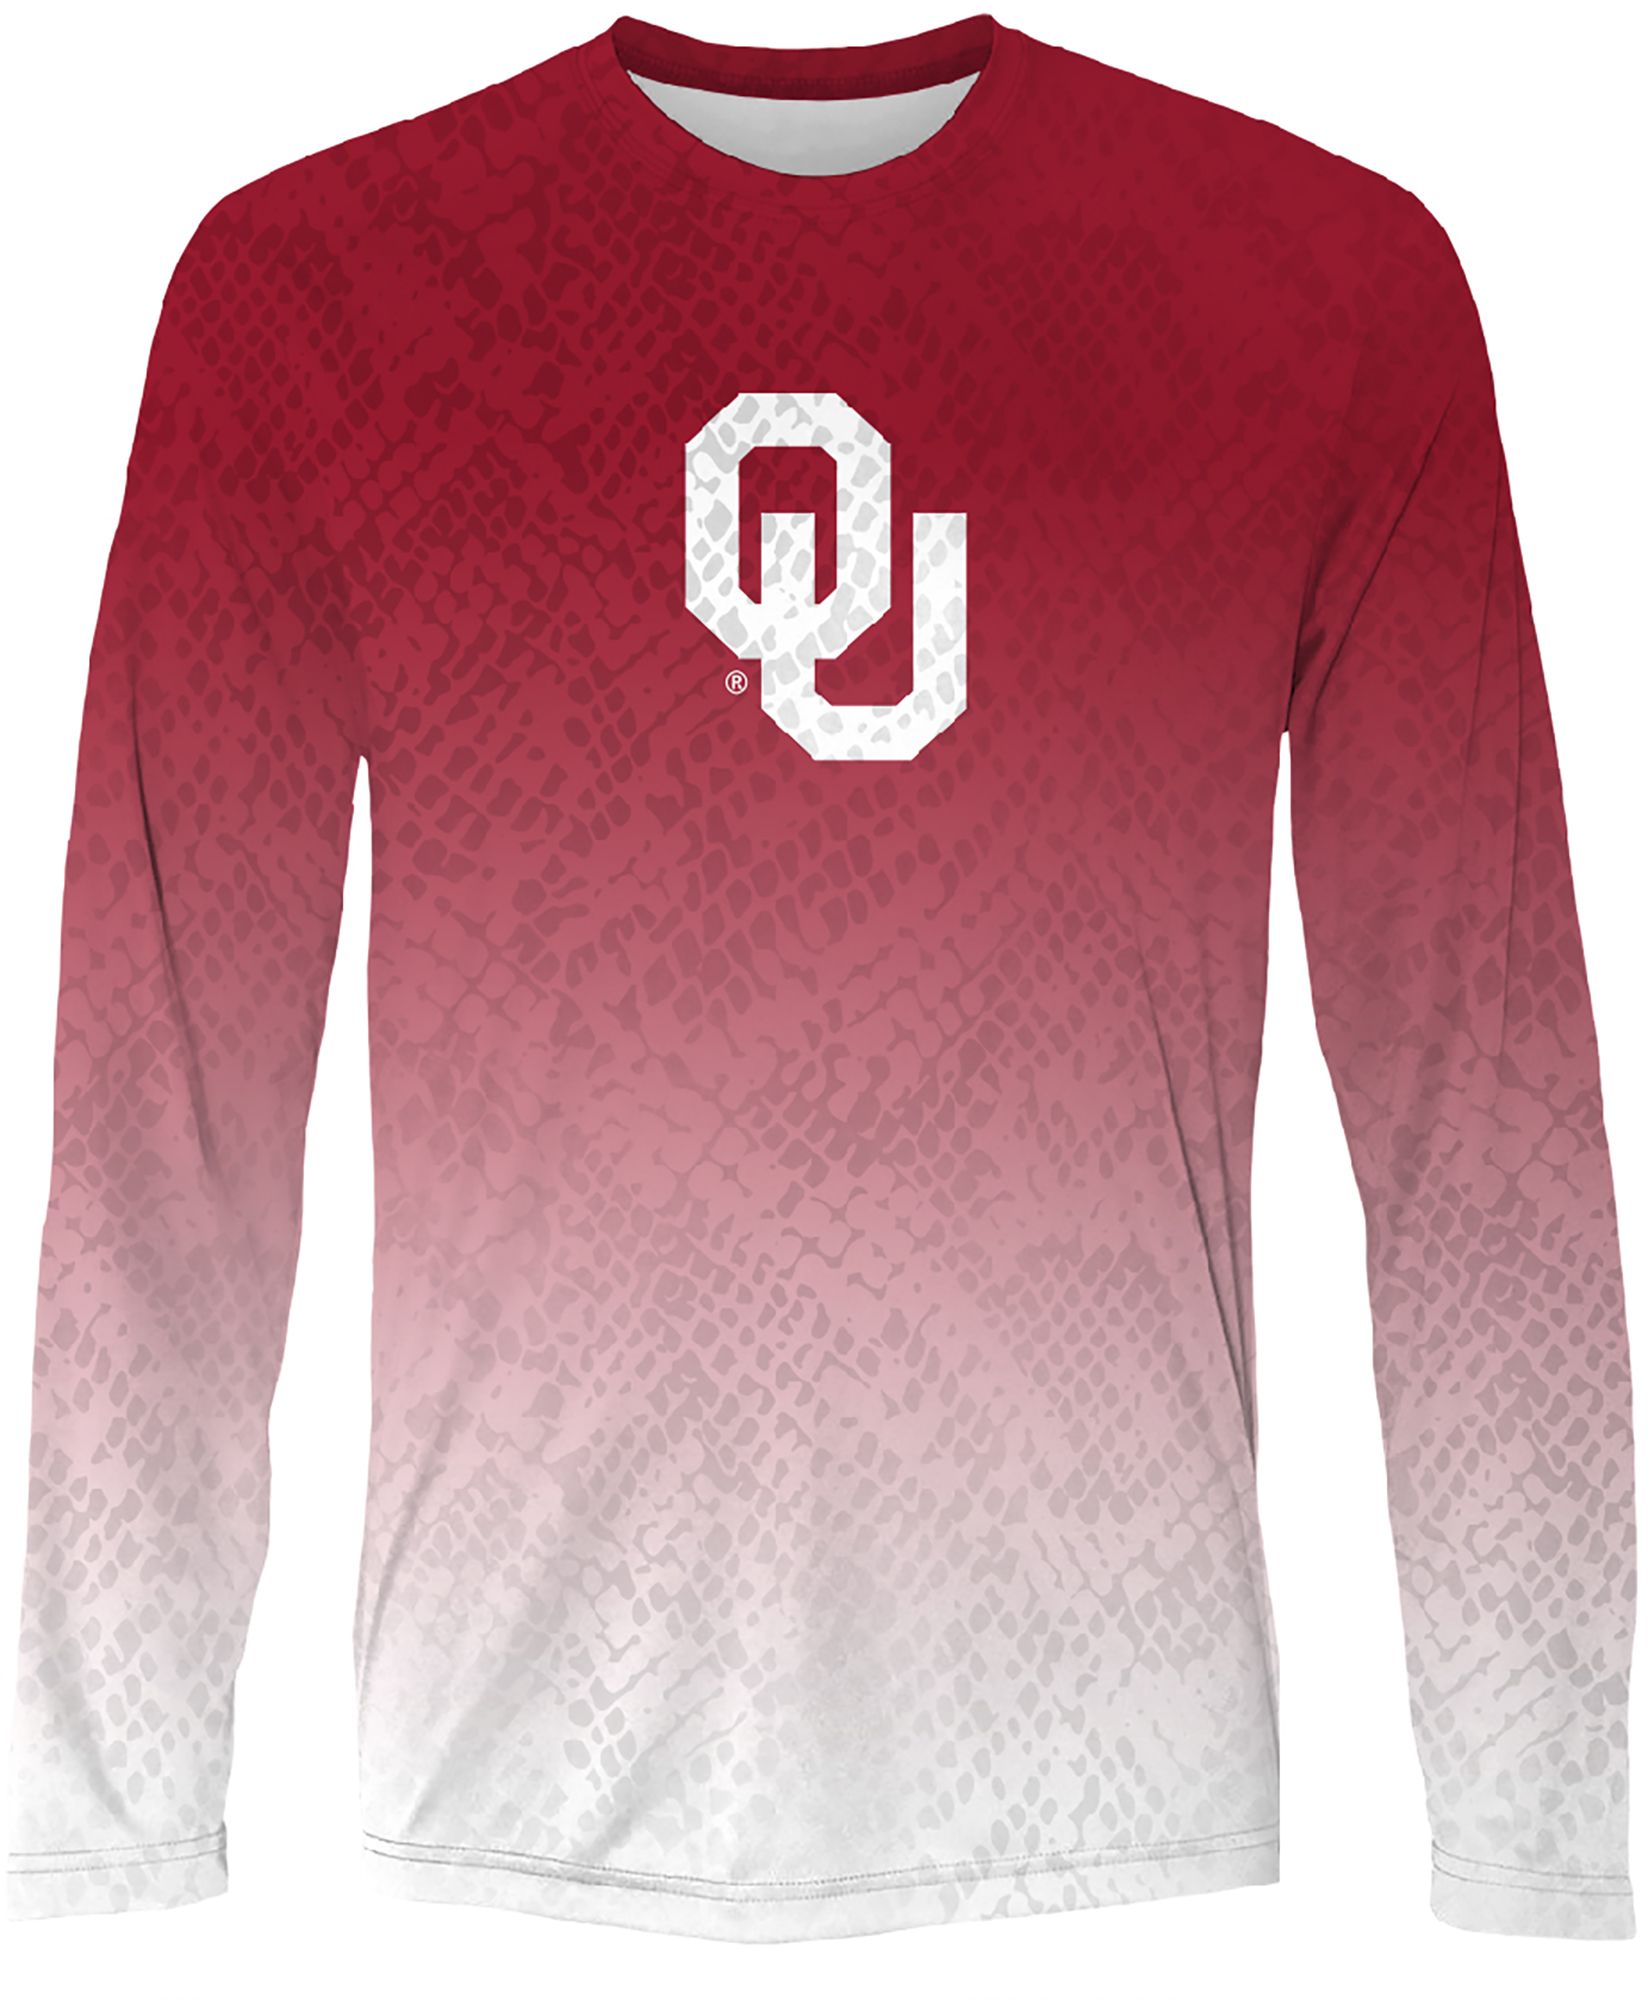 Great State Clothing Men's Oklahoma Sooners Crimson Long Sleeve T-Shirt